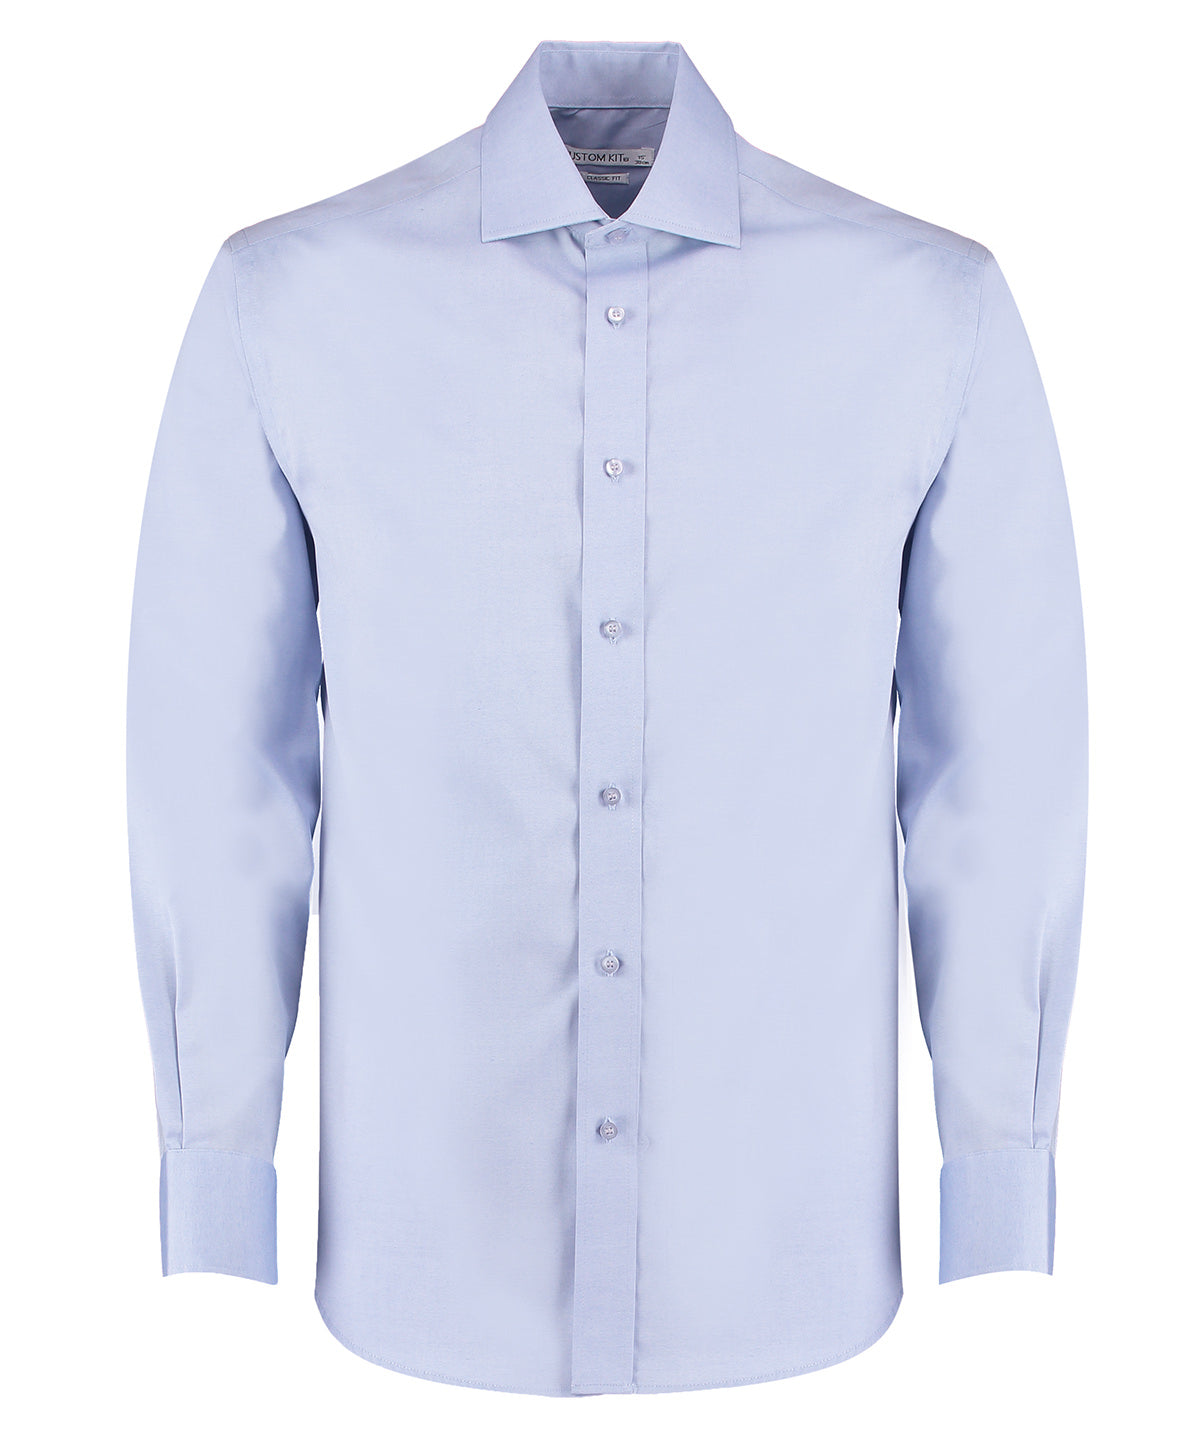 Bolir - Executive Premium Oxford Shirt Long-sleeved (classic Fit)